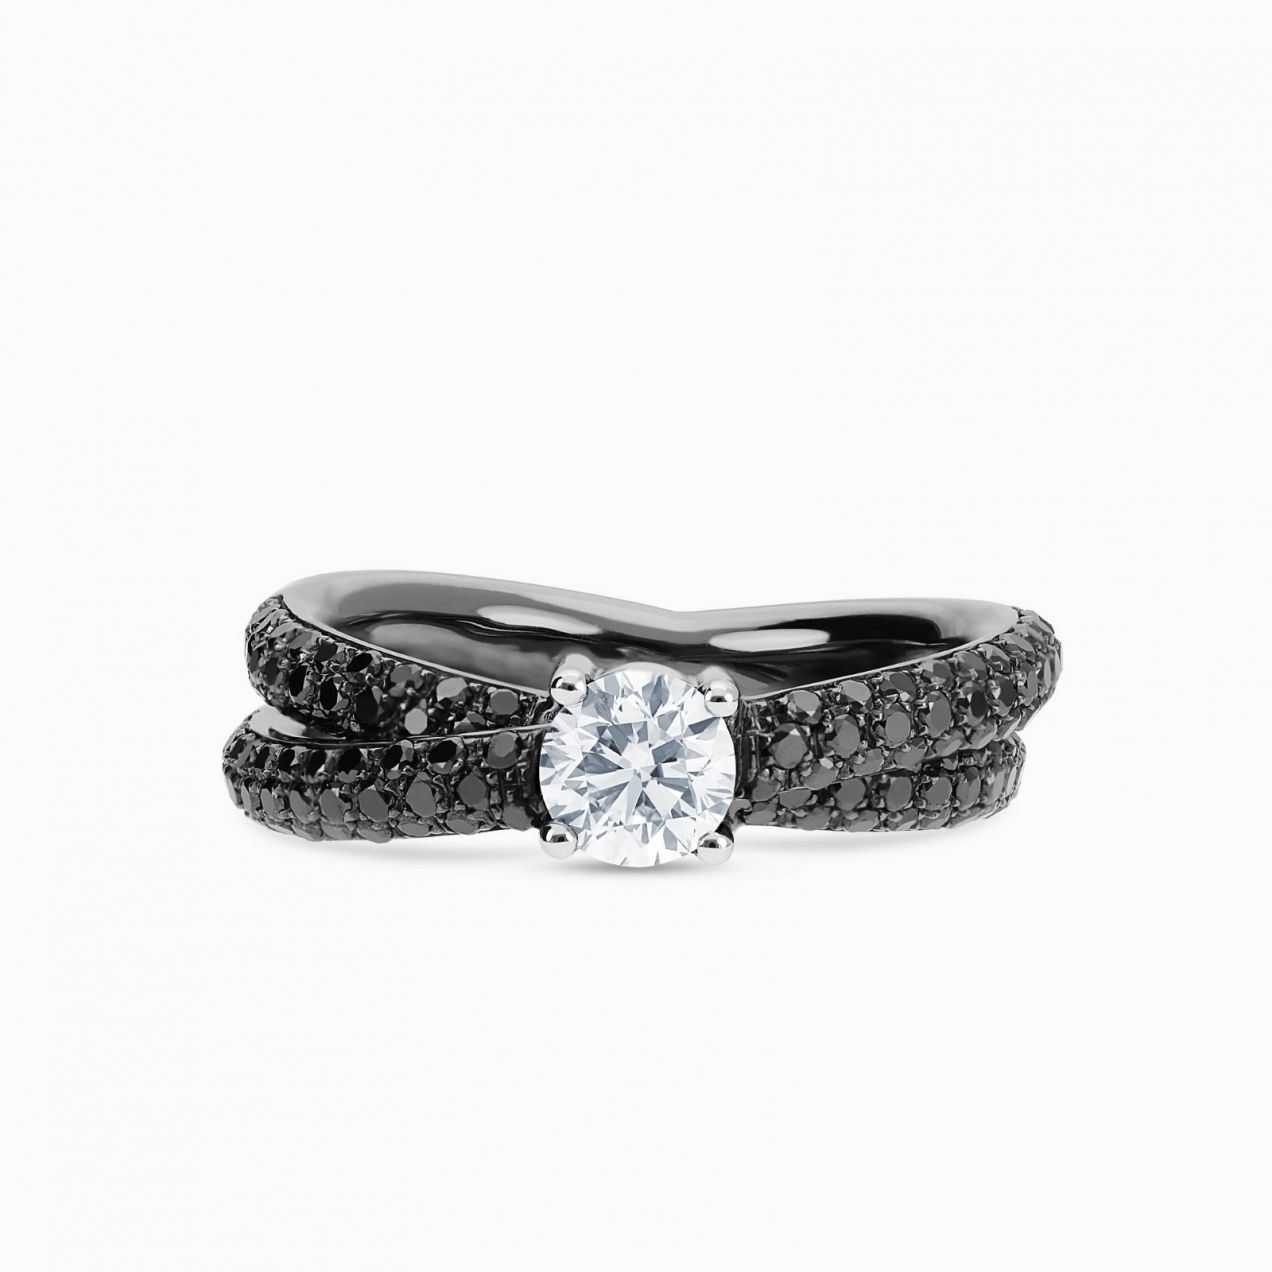 Anillo cruzado de oro rodio negro con diamantes negros y diamante central blanco